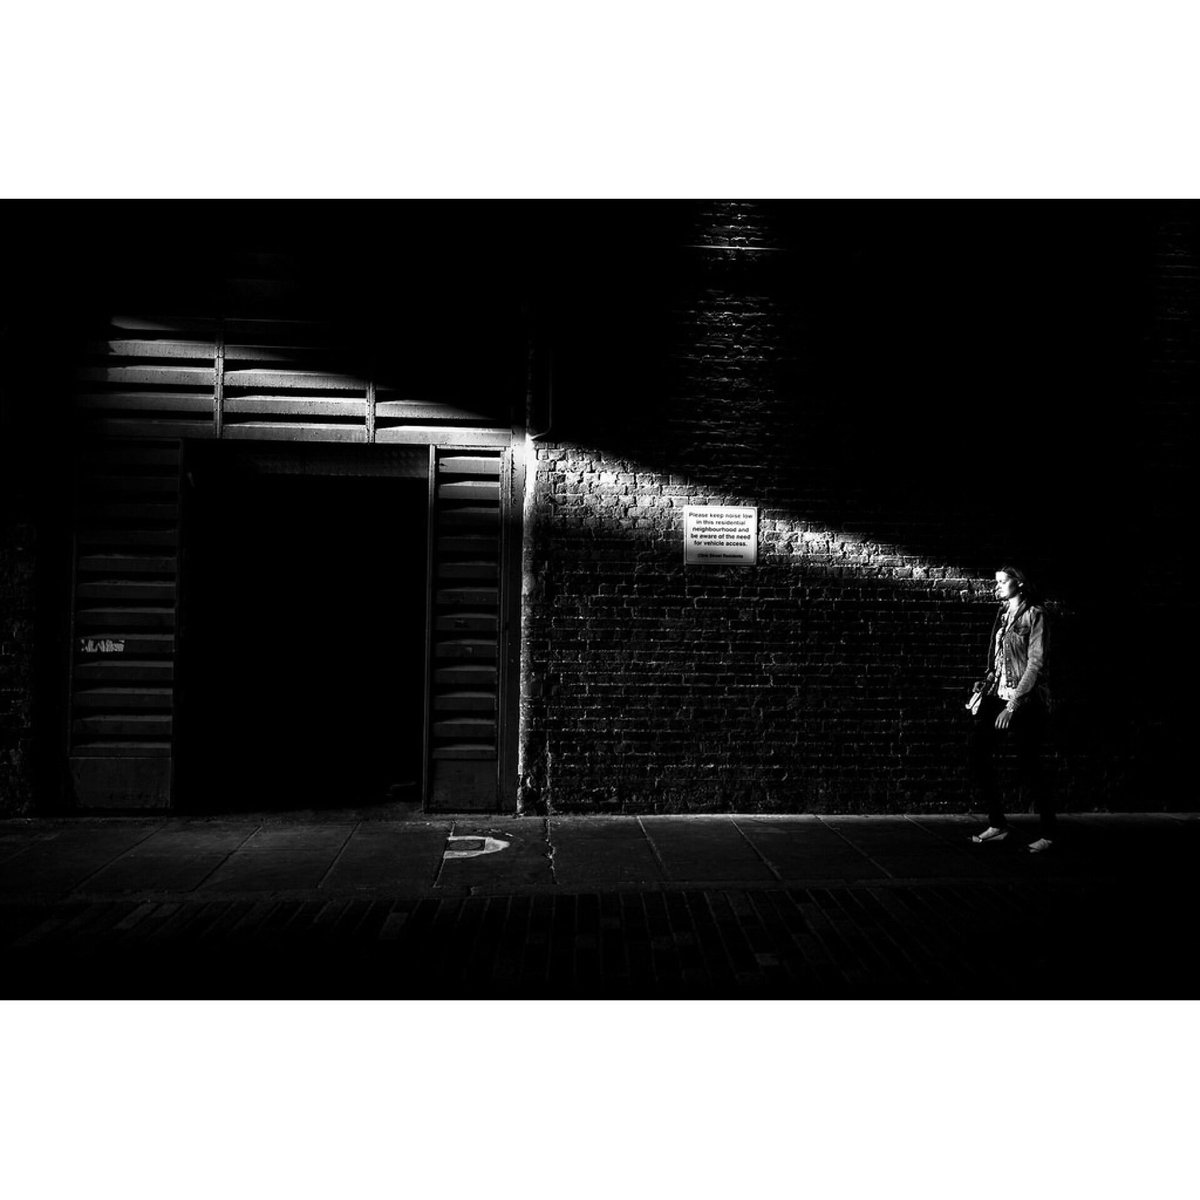 London @StreetPhotoInt @leica_camera @Leica_UK #streetphotography #blackandwhitephotography #leicamonochrom